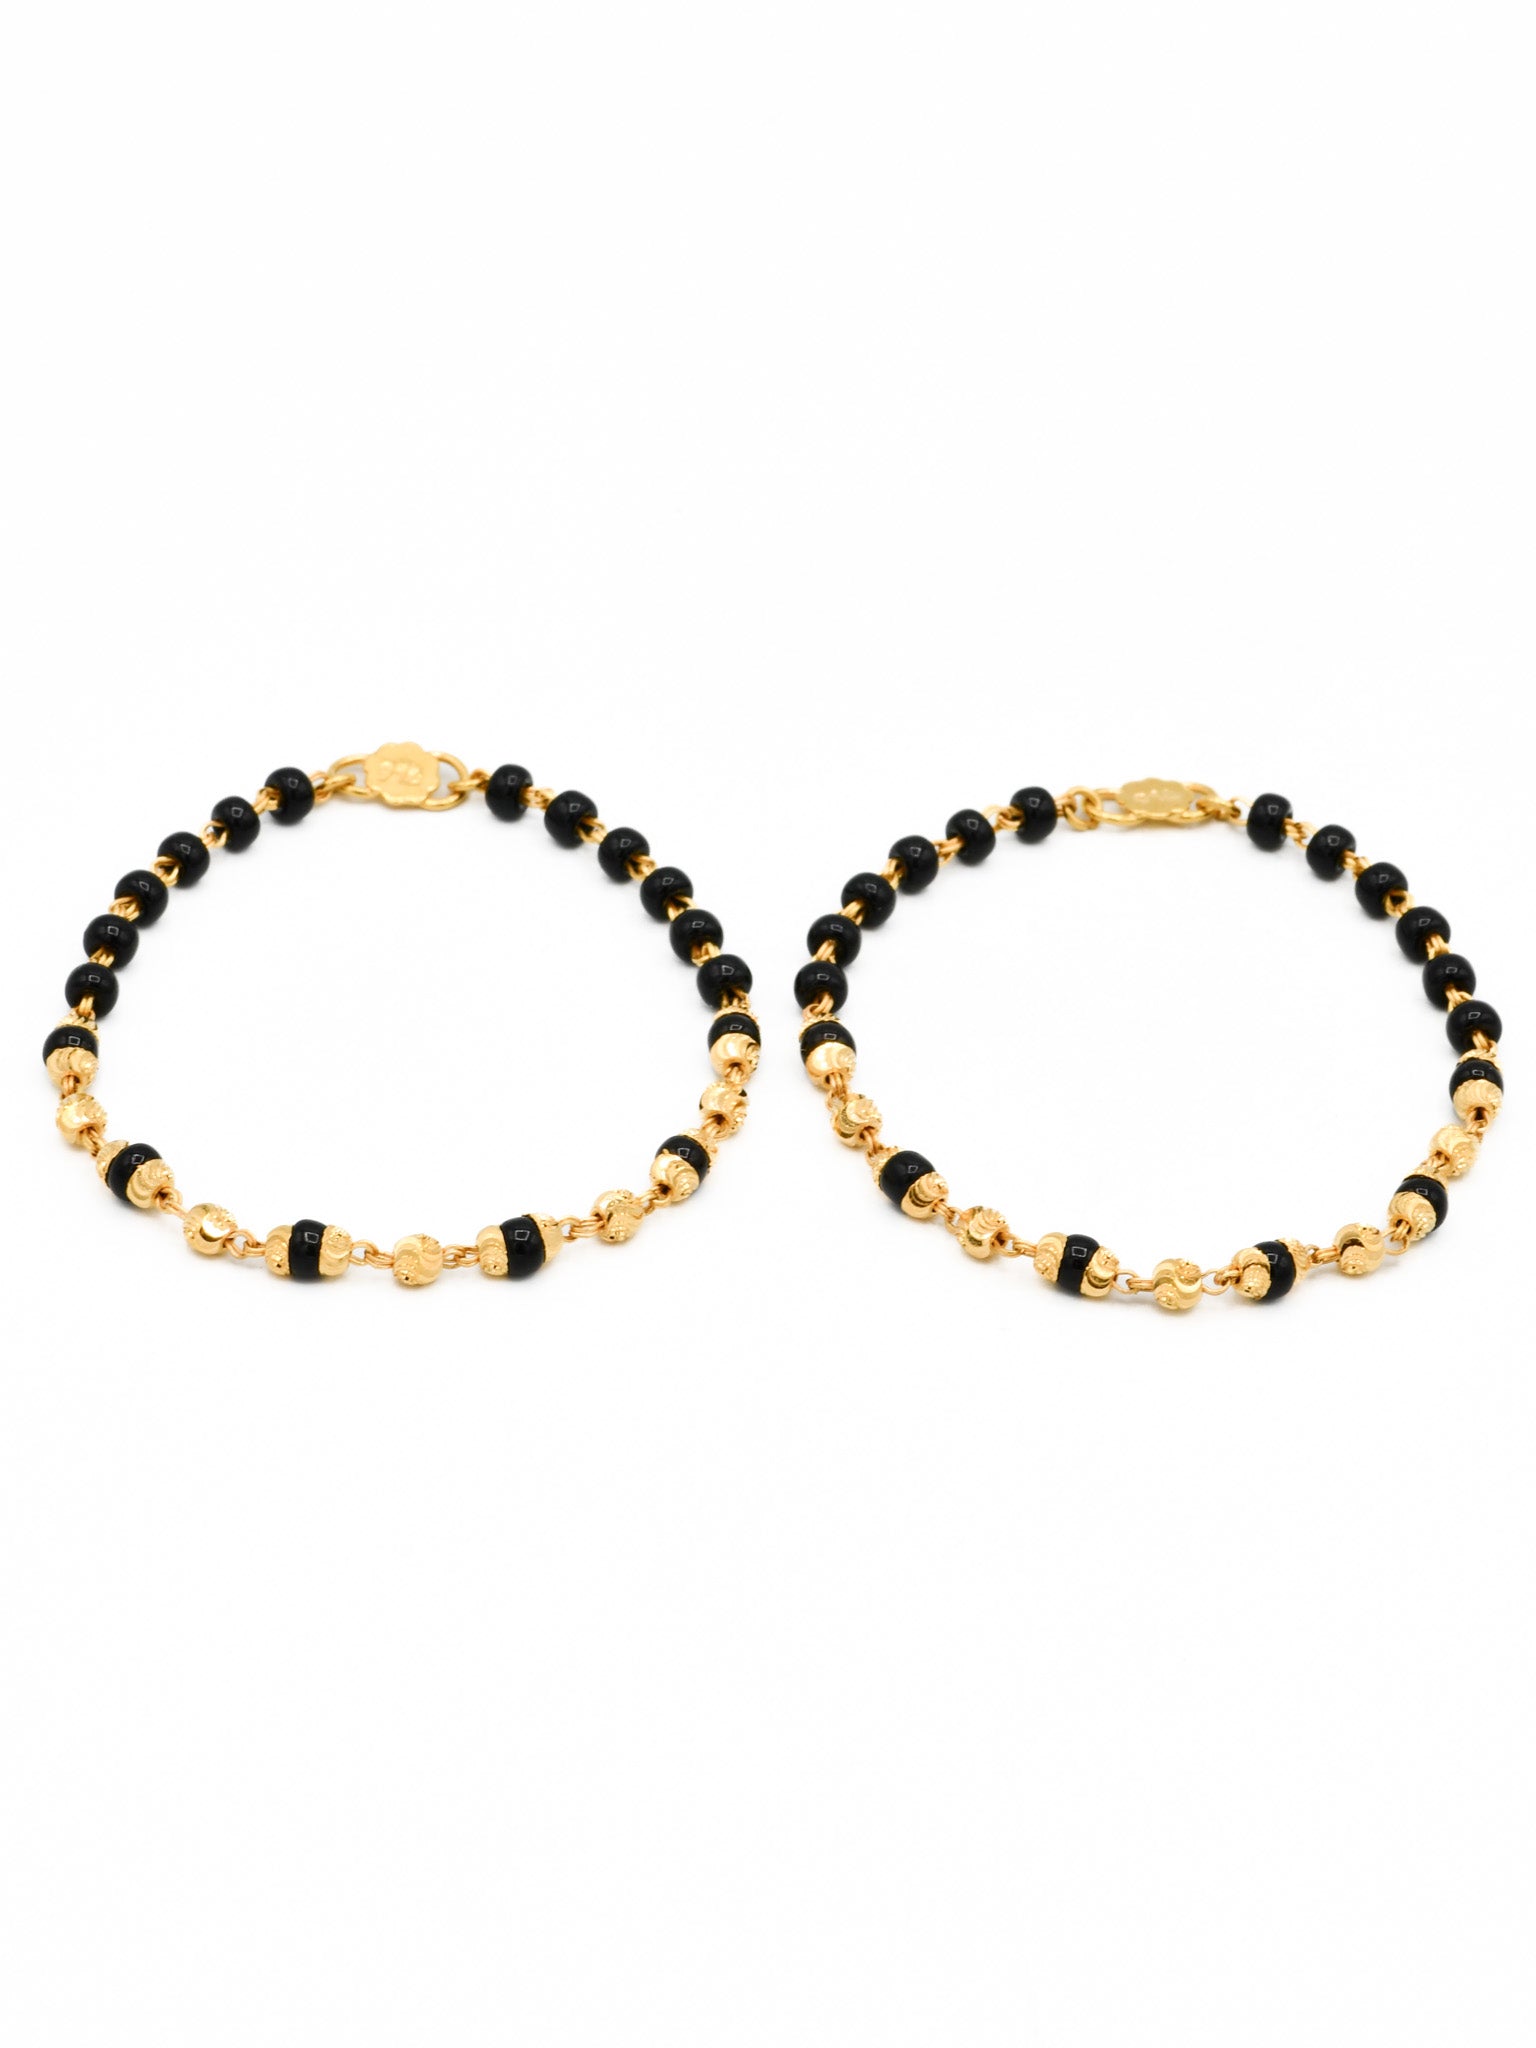 22ct Gold Ball Black Beads Pair Baby Bracelet - Roop Darshan